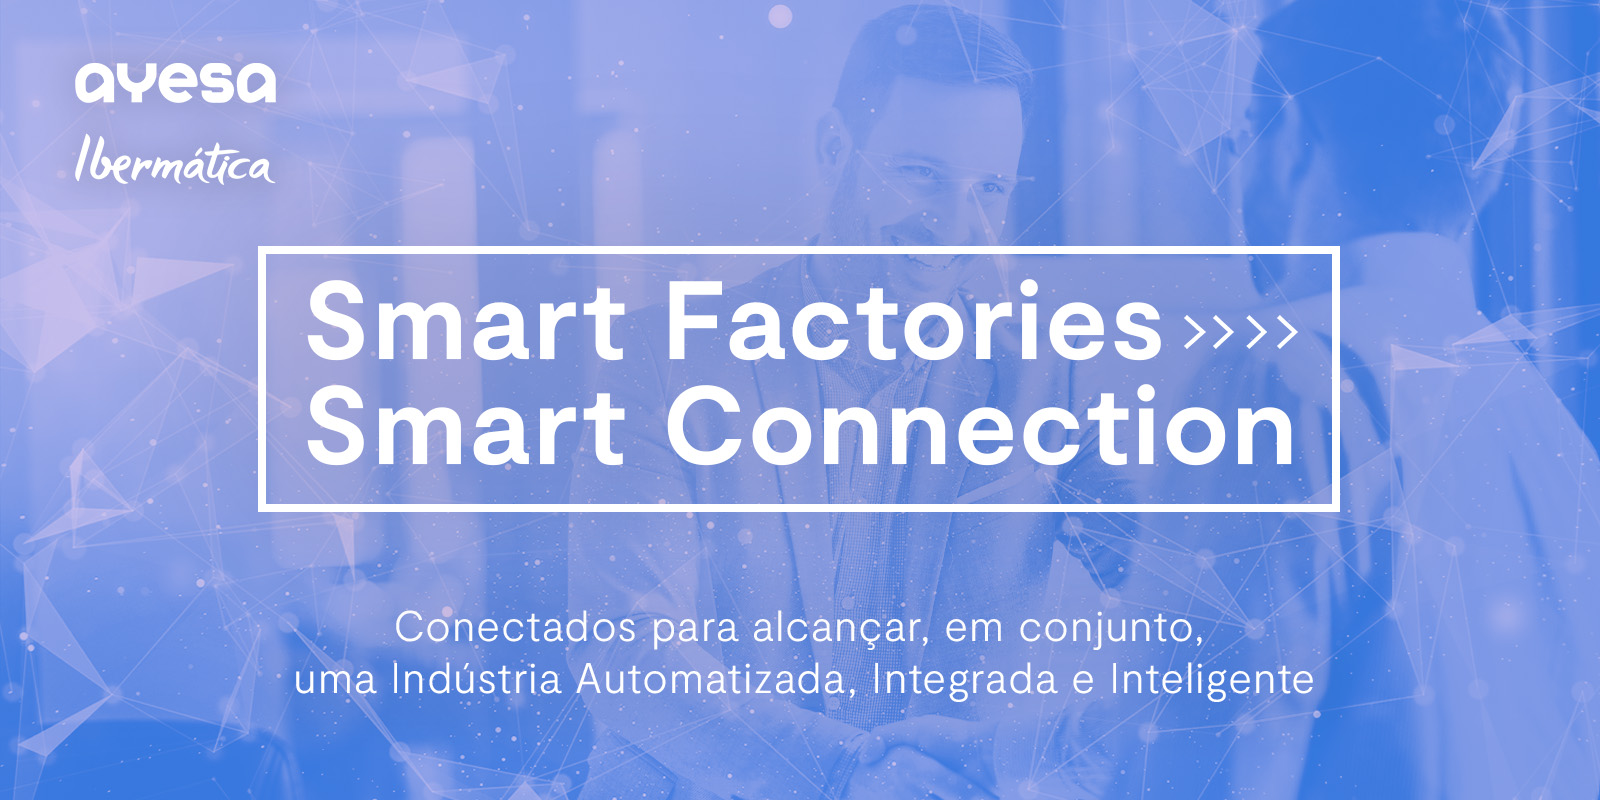 Sala cheia no Evento “Smart Factories >> Smart Connection”